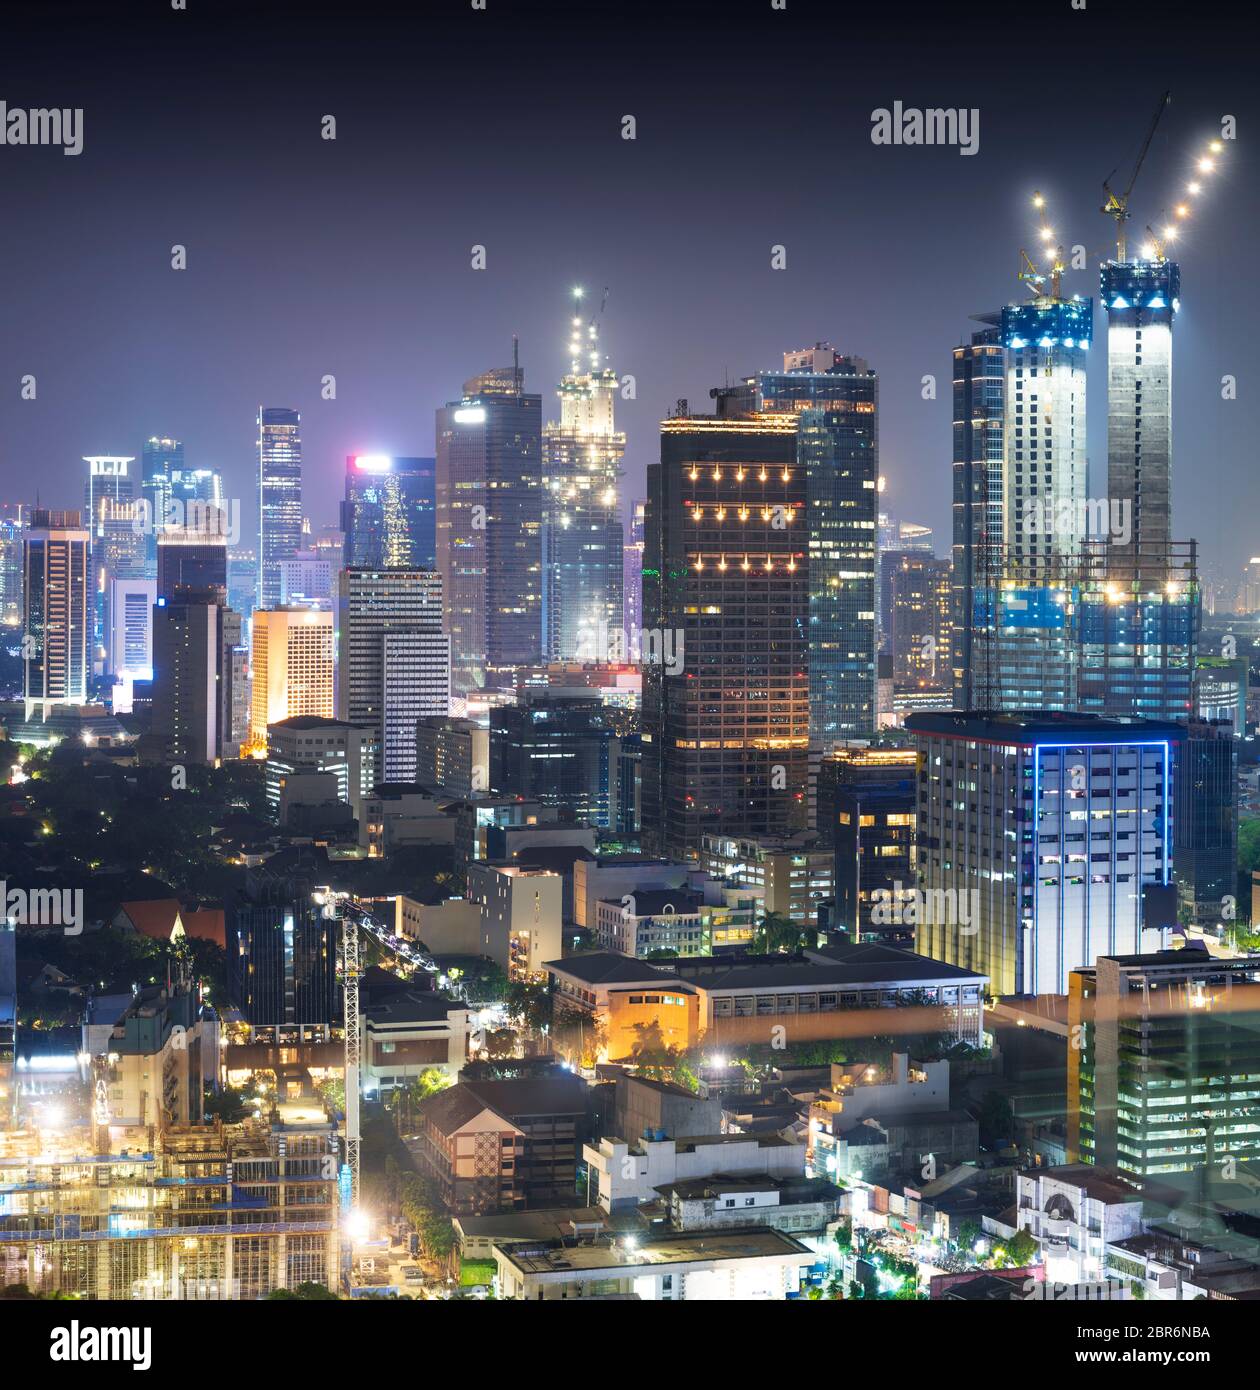 Jakarta city skyline with urban skyscrapers at night. Jakarta, Indonesia Stock Photo